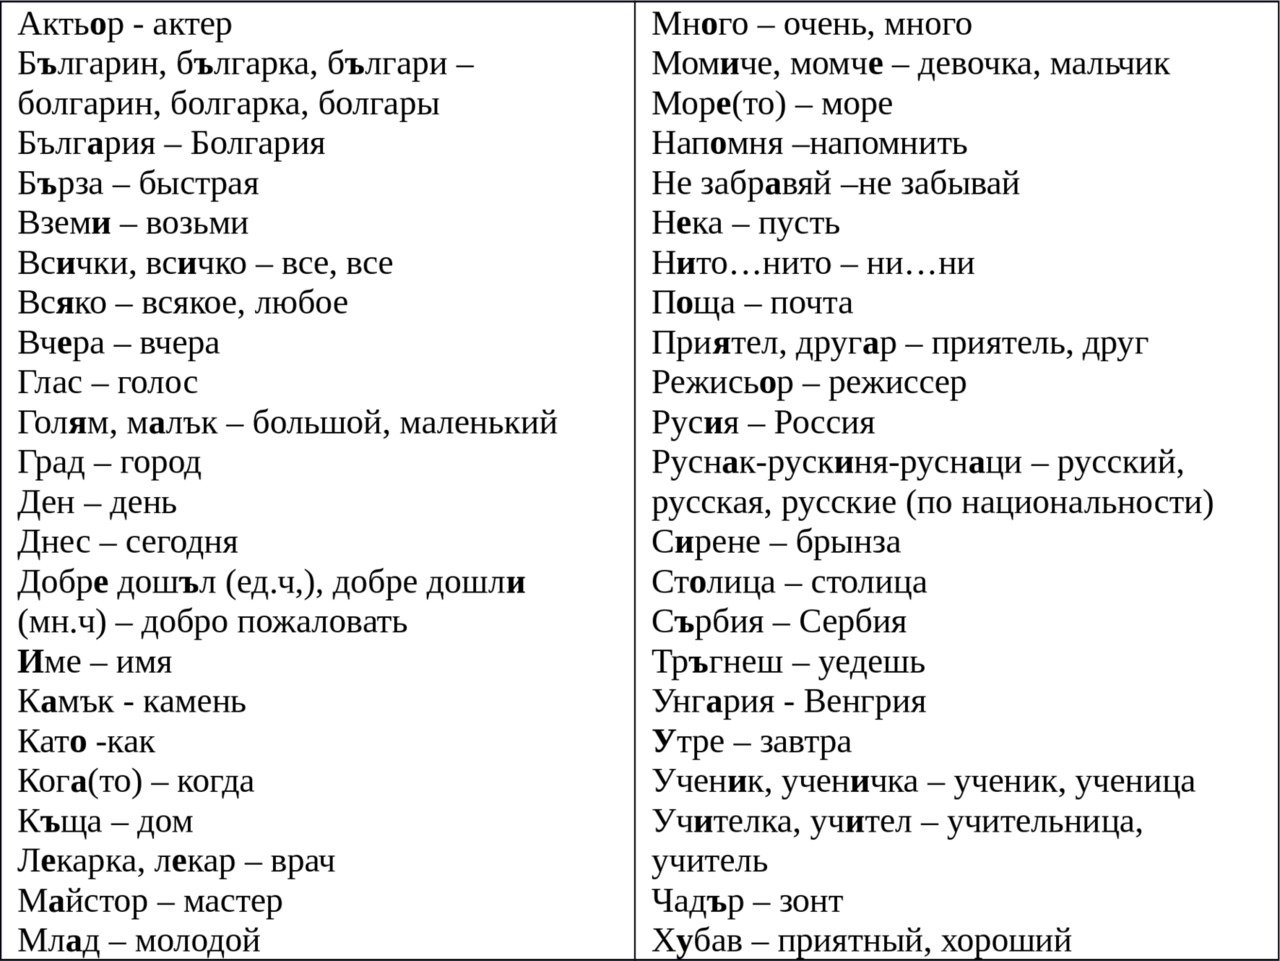 Текст на болгарском языке